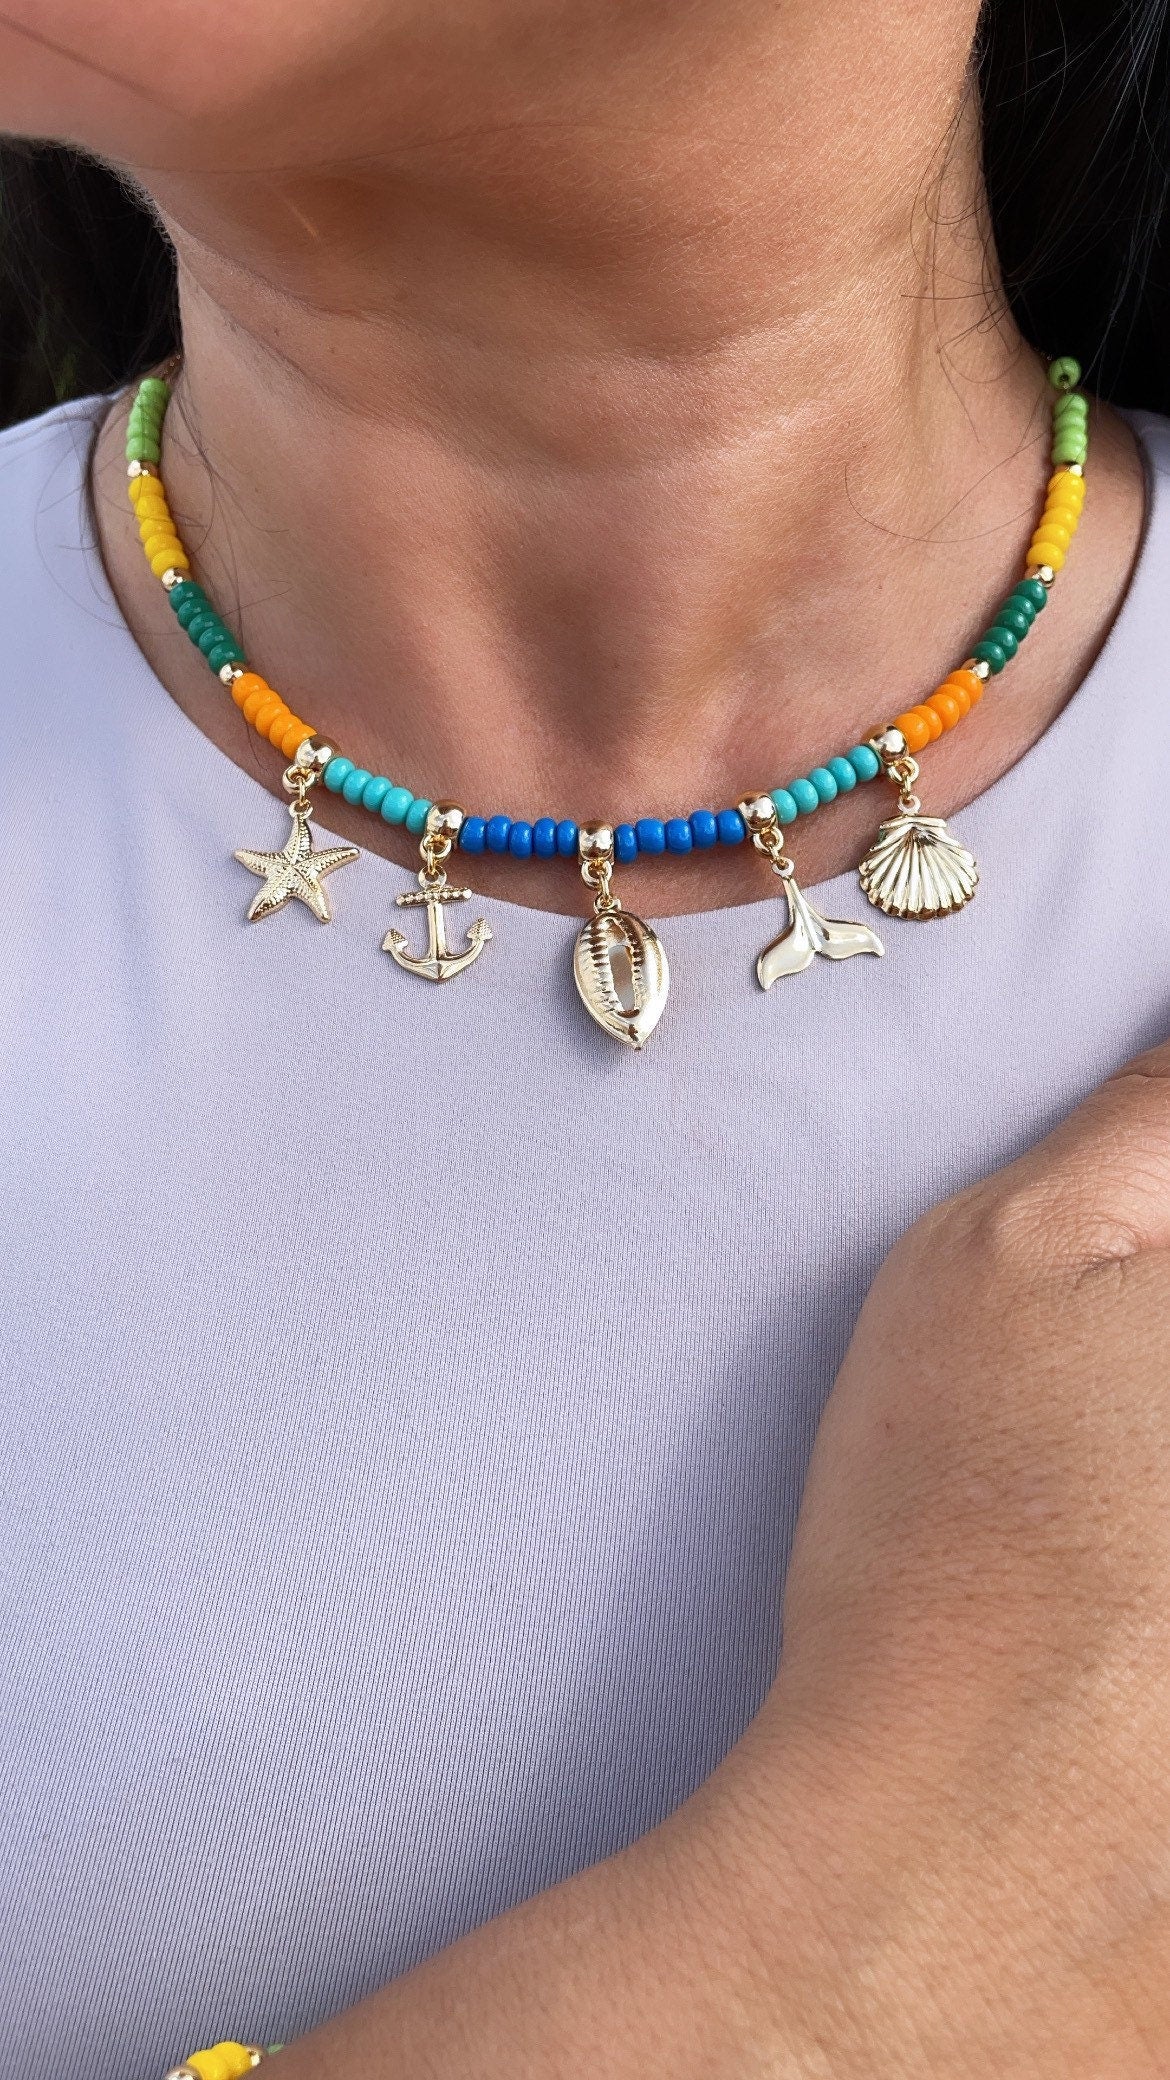 18k Gold Layered Colorful Beads Sea Inspired Charm Set Bracelet n Necklace Marine